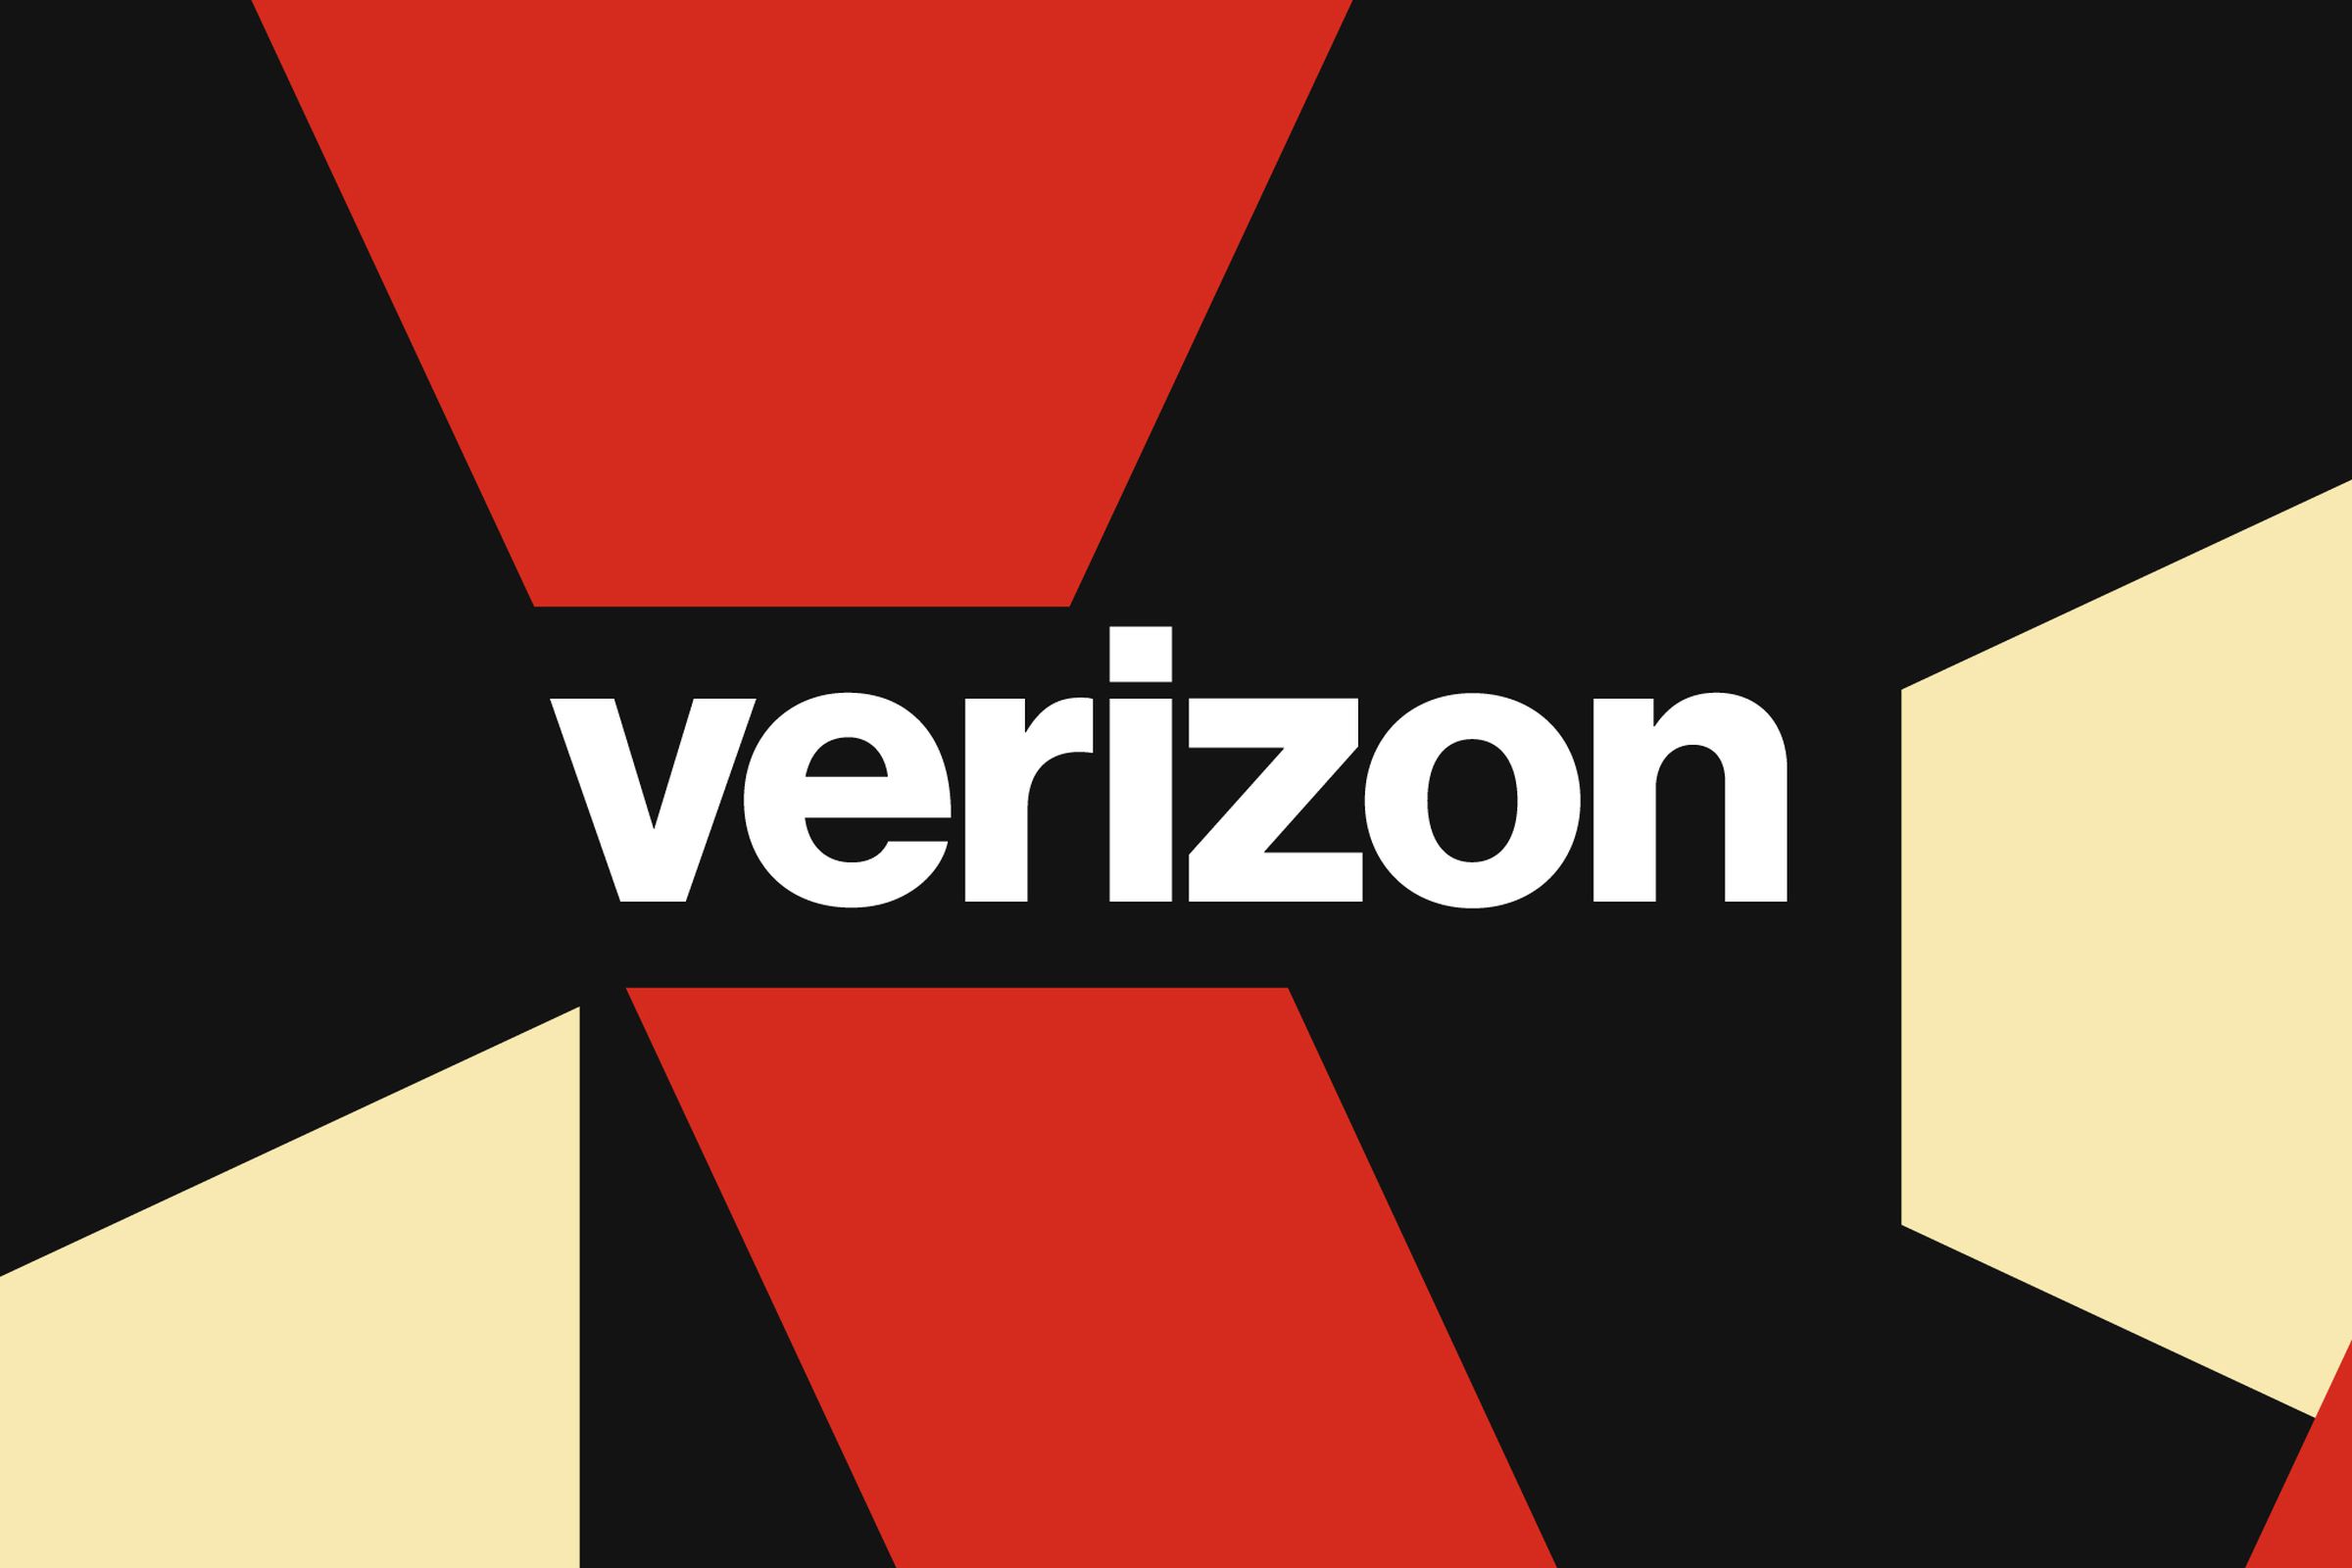 An illustration of the Verizon logo.